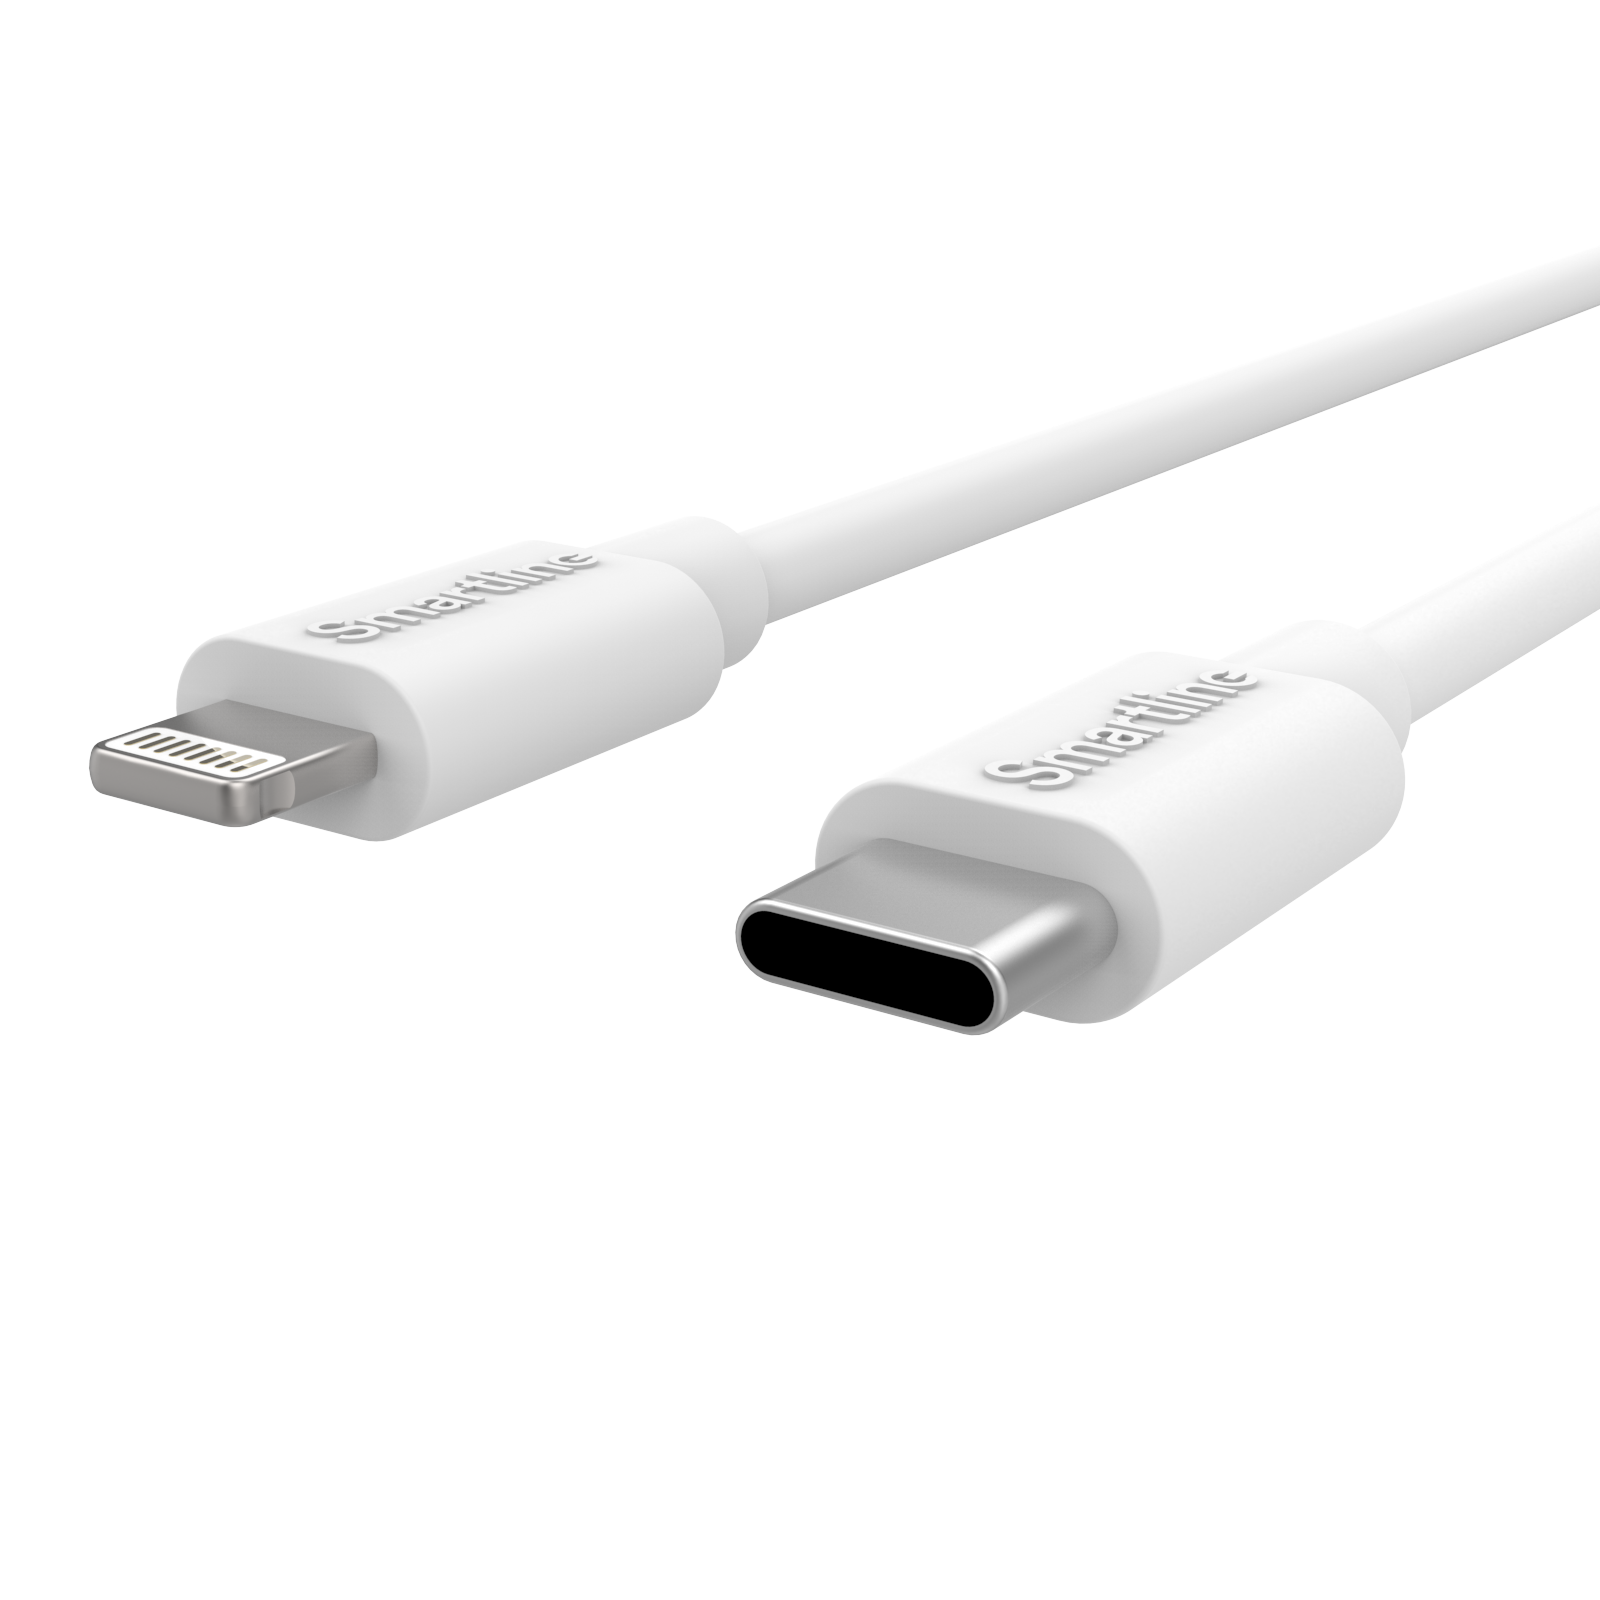 iPhone 12/12 Pro Kit för optimal laddning med 2m kabel, vit